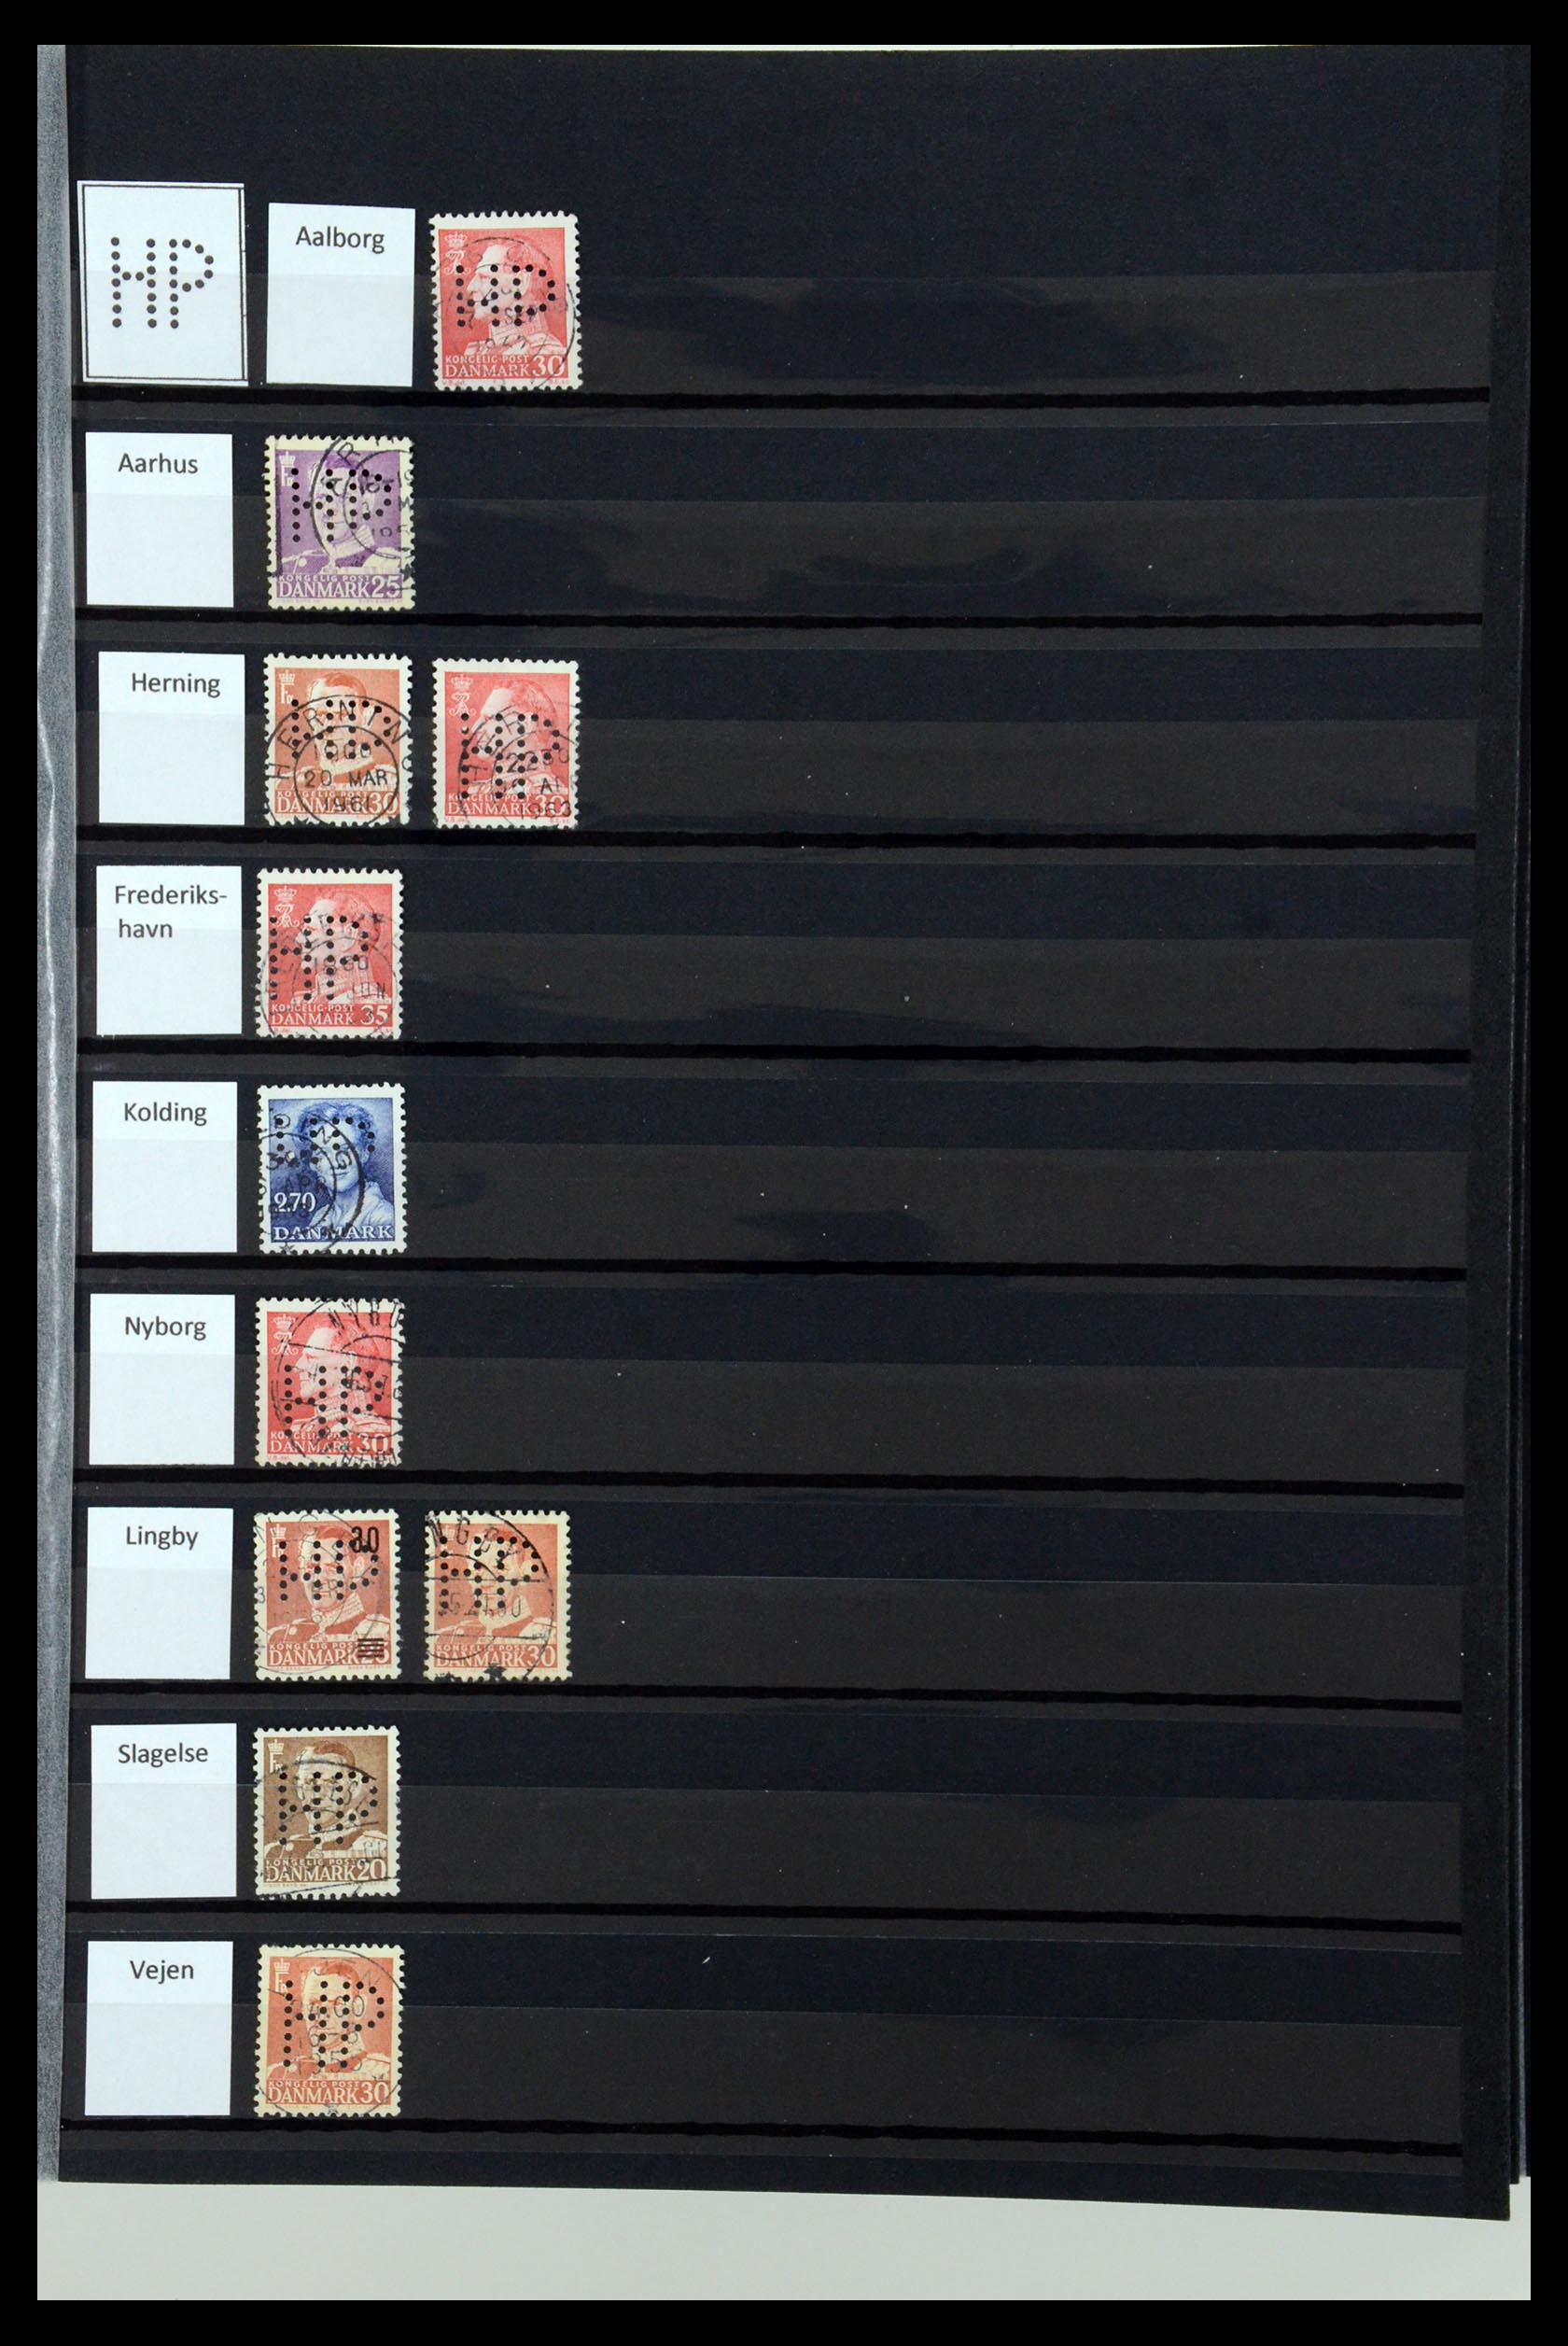 36396 080 - Stamp collection 36396 Denmark perfins.